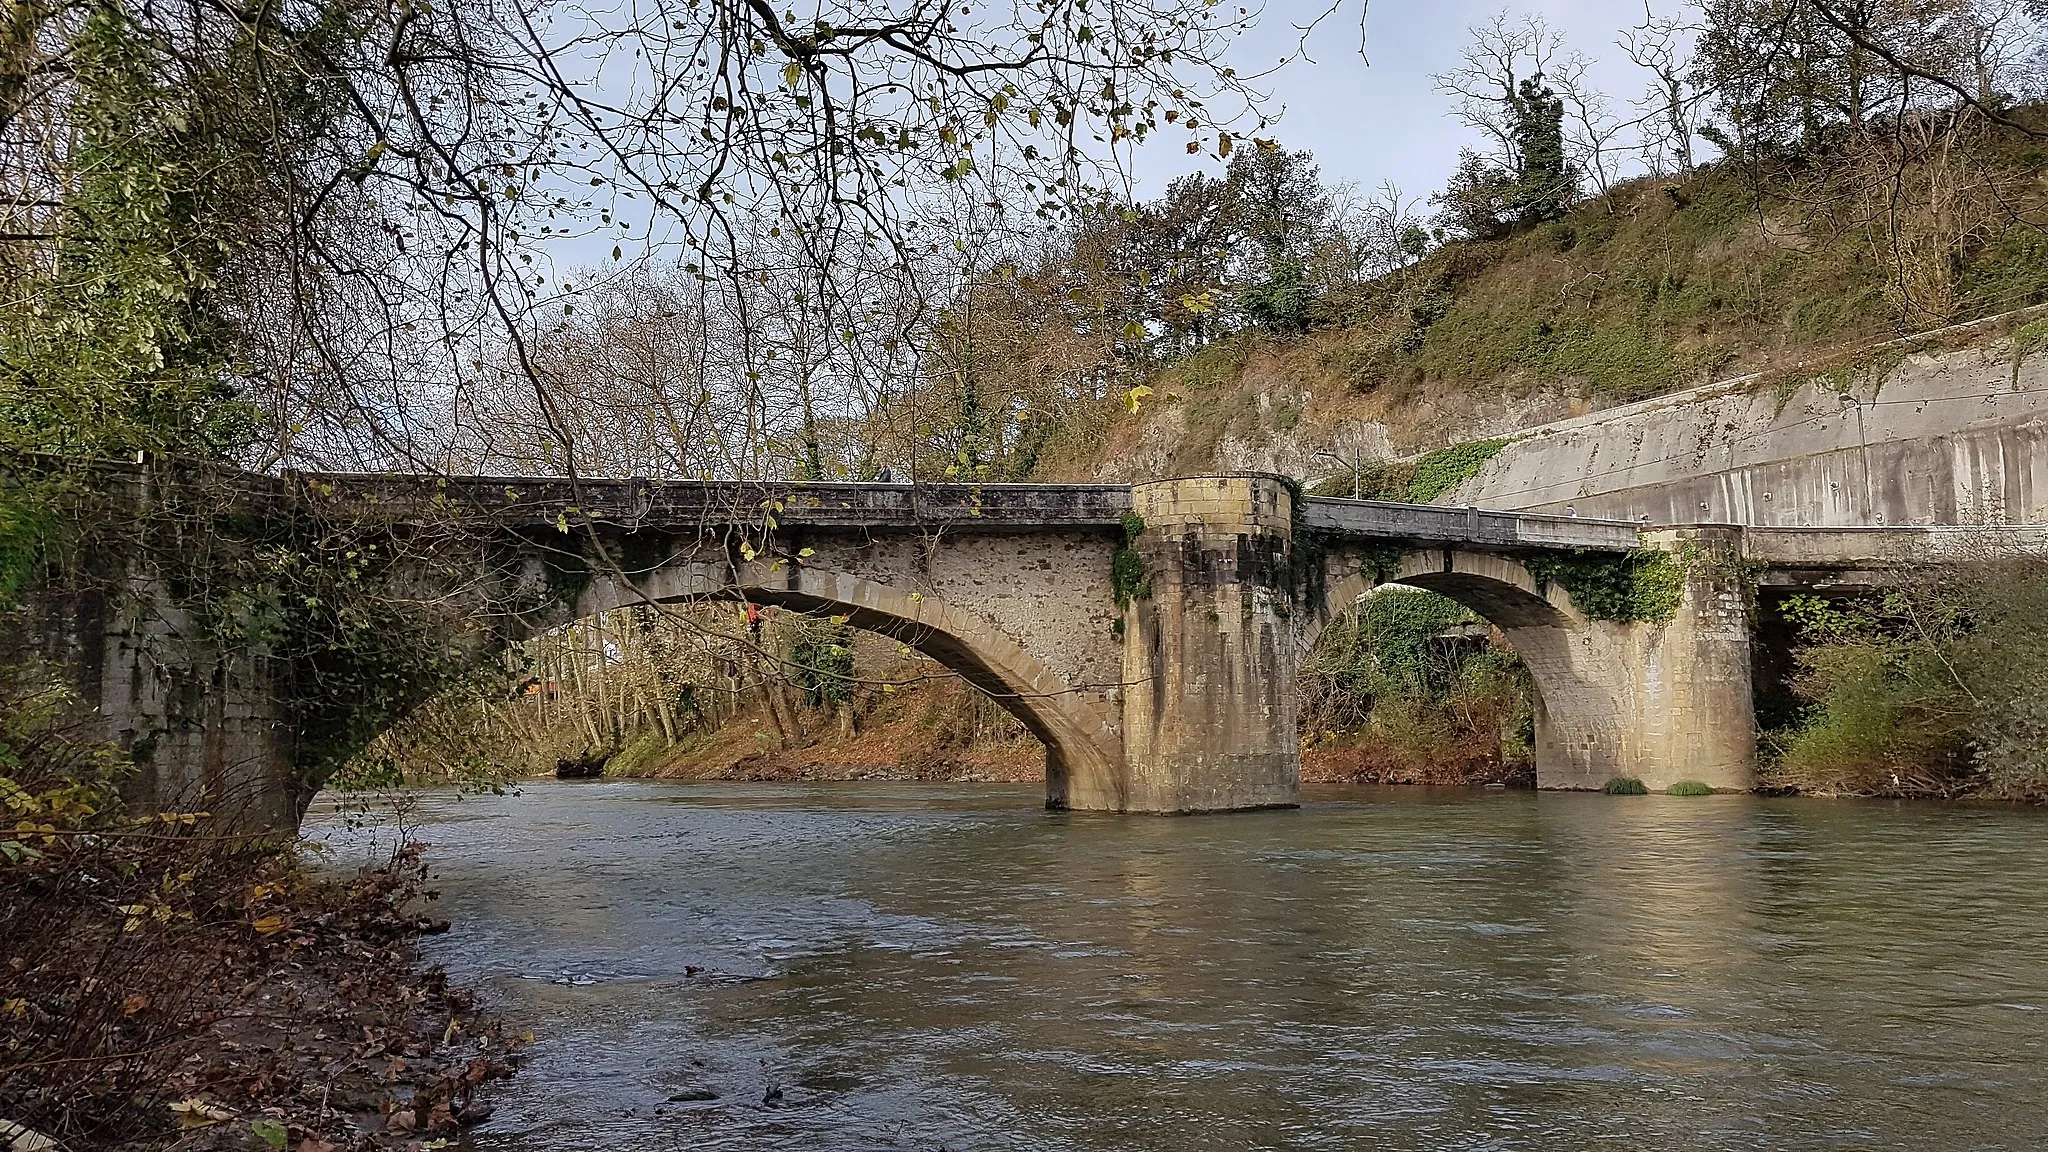 Photo showing: The Aliri bridge over the Oria river that connects Usurbil and Zubieta